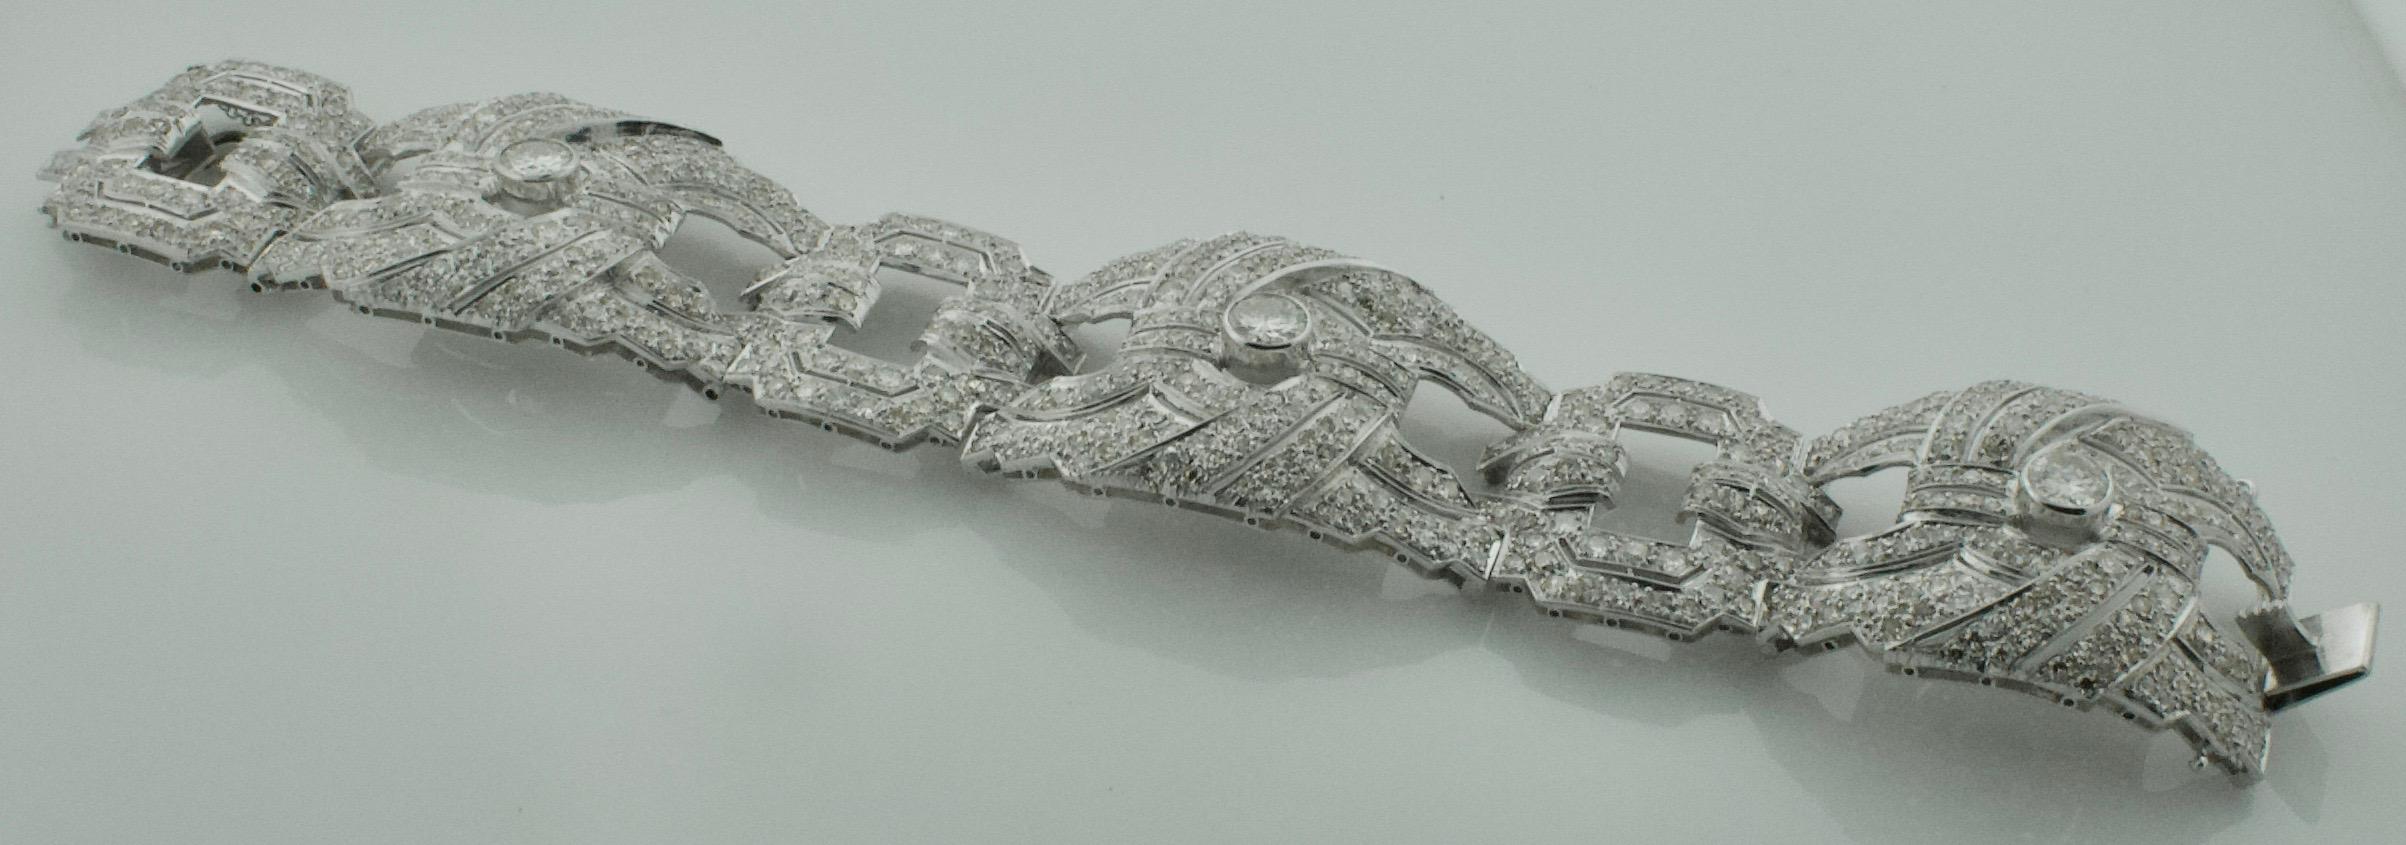 Diamantarmband aus Platin, ca. 1920er Jahre 25,45 Karat (Art déco)